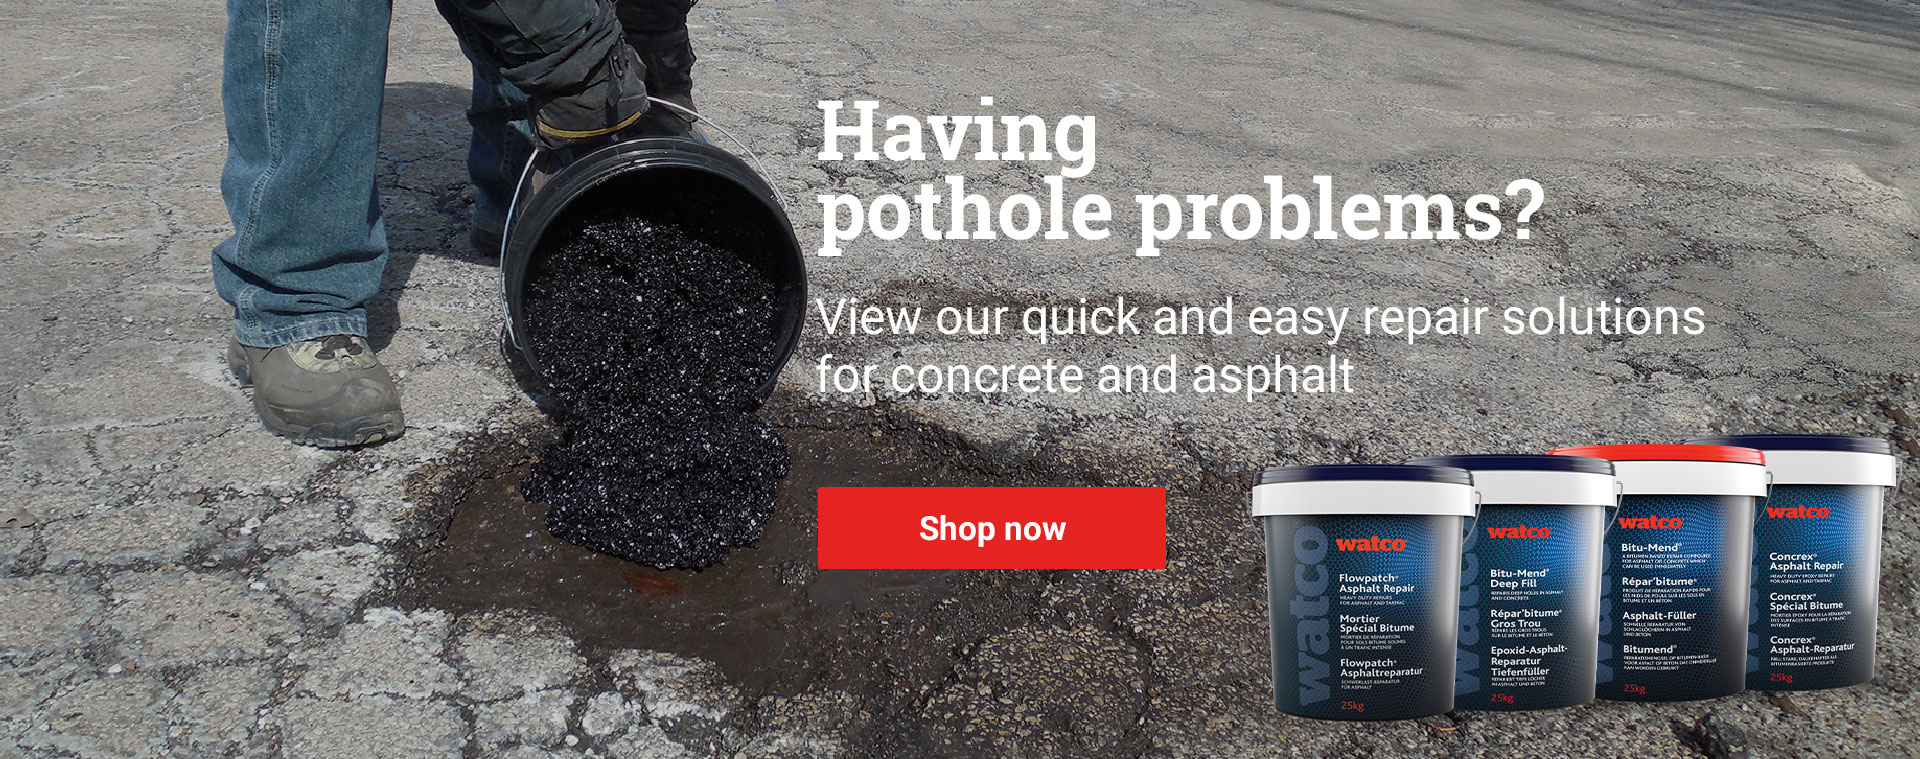 Having pothole problems, take a look at out asphalt repair range